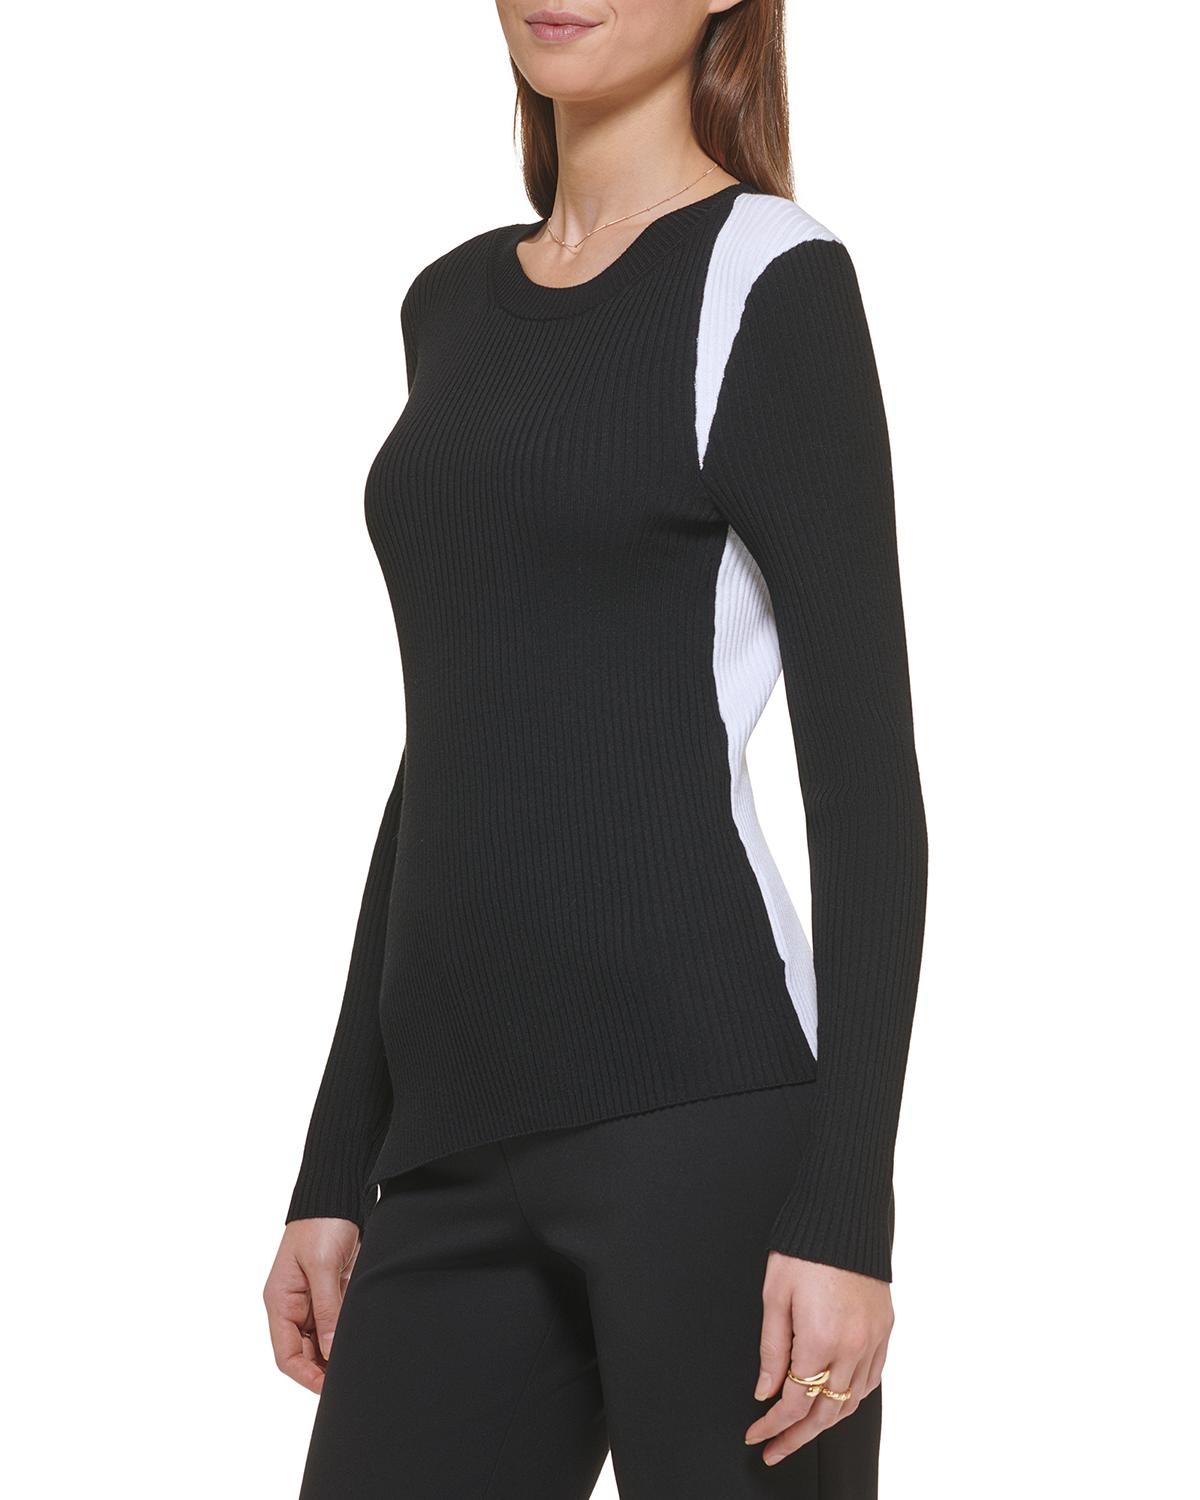 DKNY - Color block crewneck sweater, Black, large image number 2